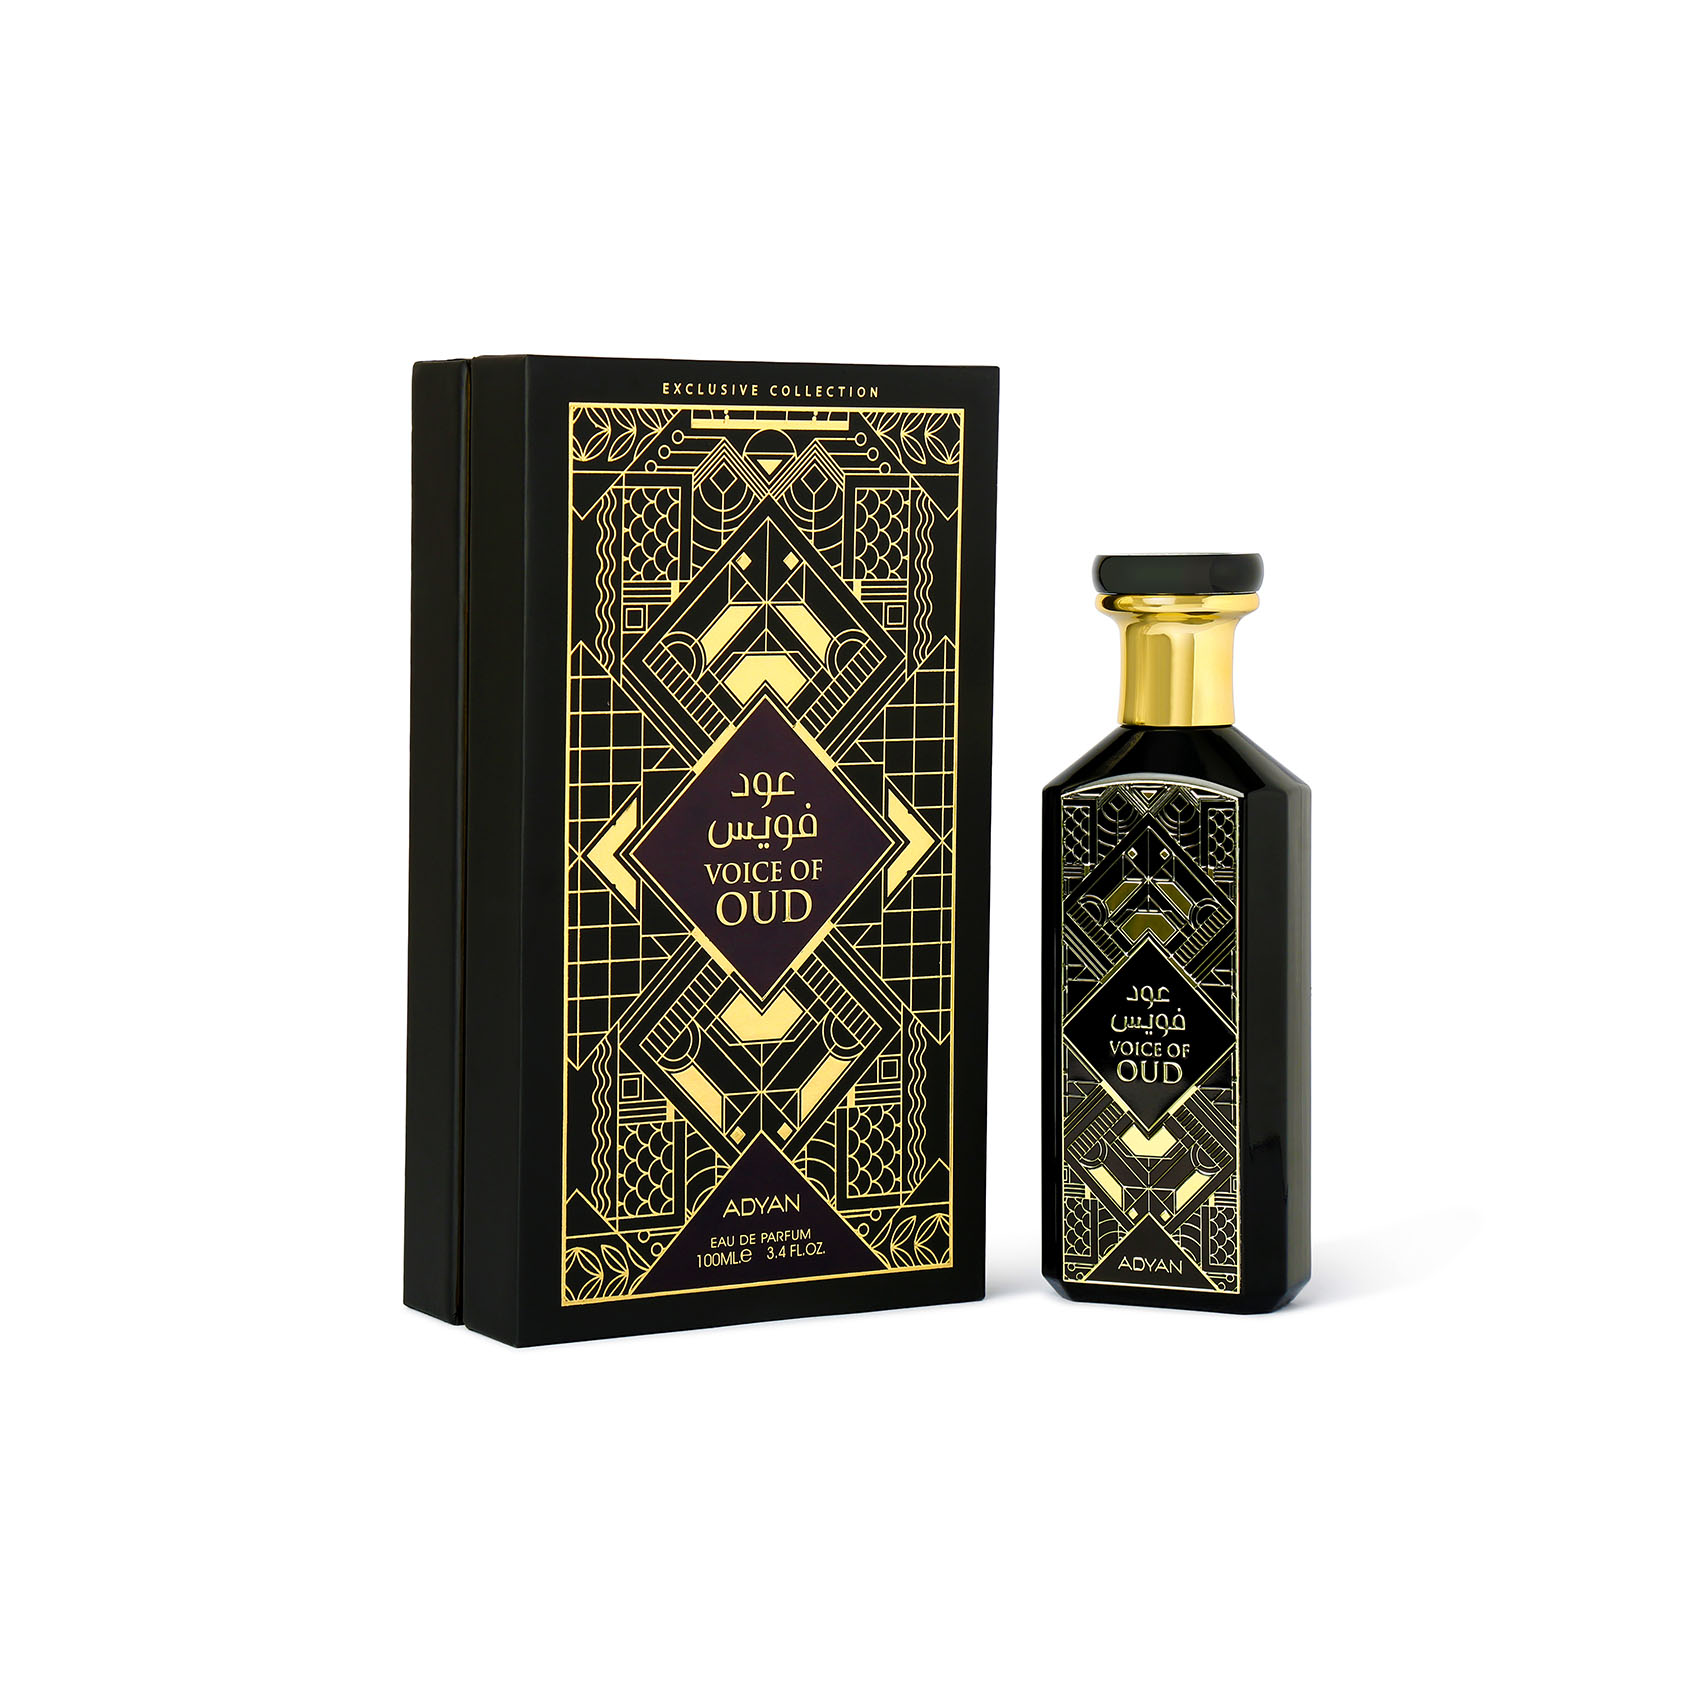 Voice Of Oud Eau De Parfum 100ml Perfume For Men & Women  (Adyan By Anfar) - Made In Dubai